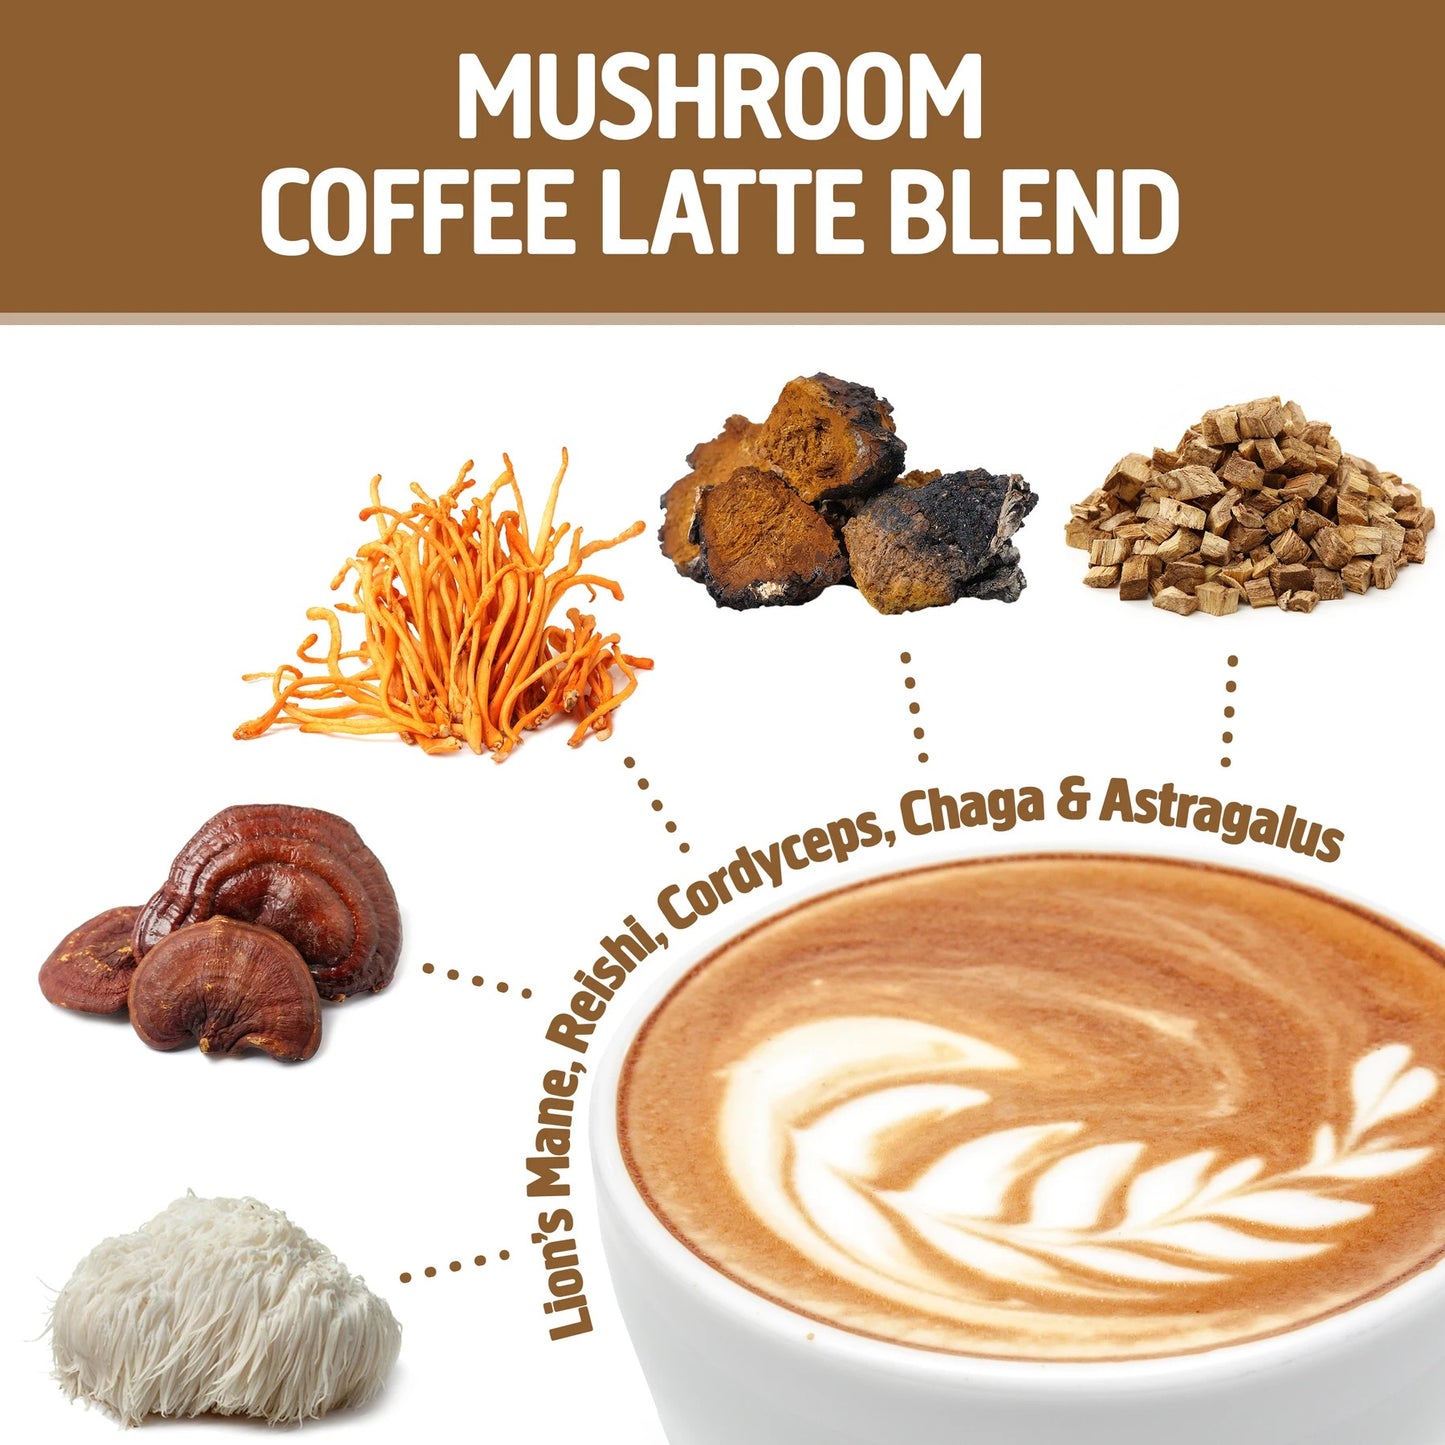 Om Mushroom Coffee Latte Blend